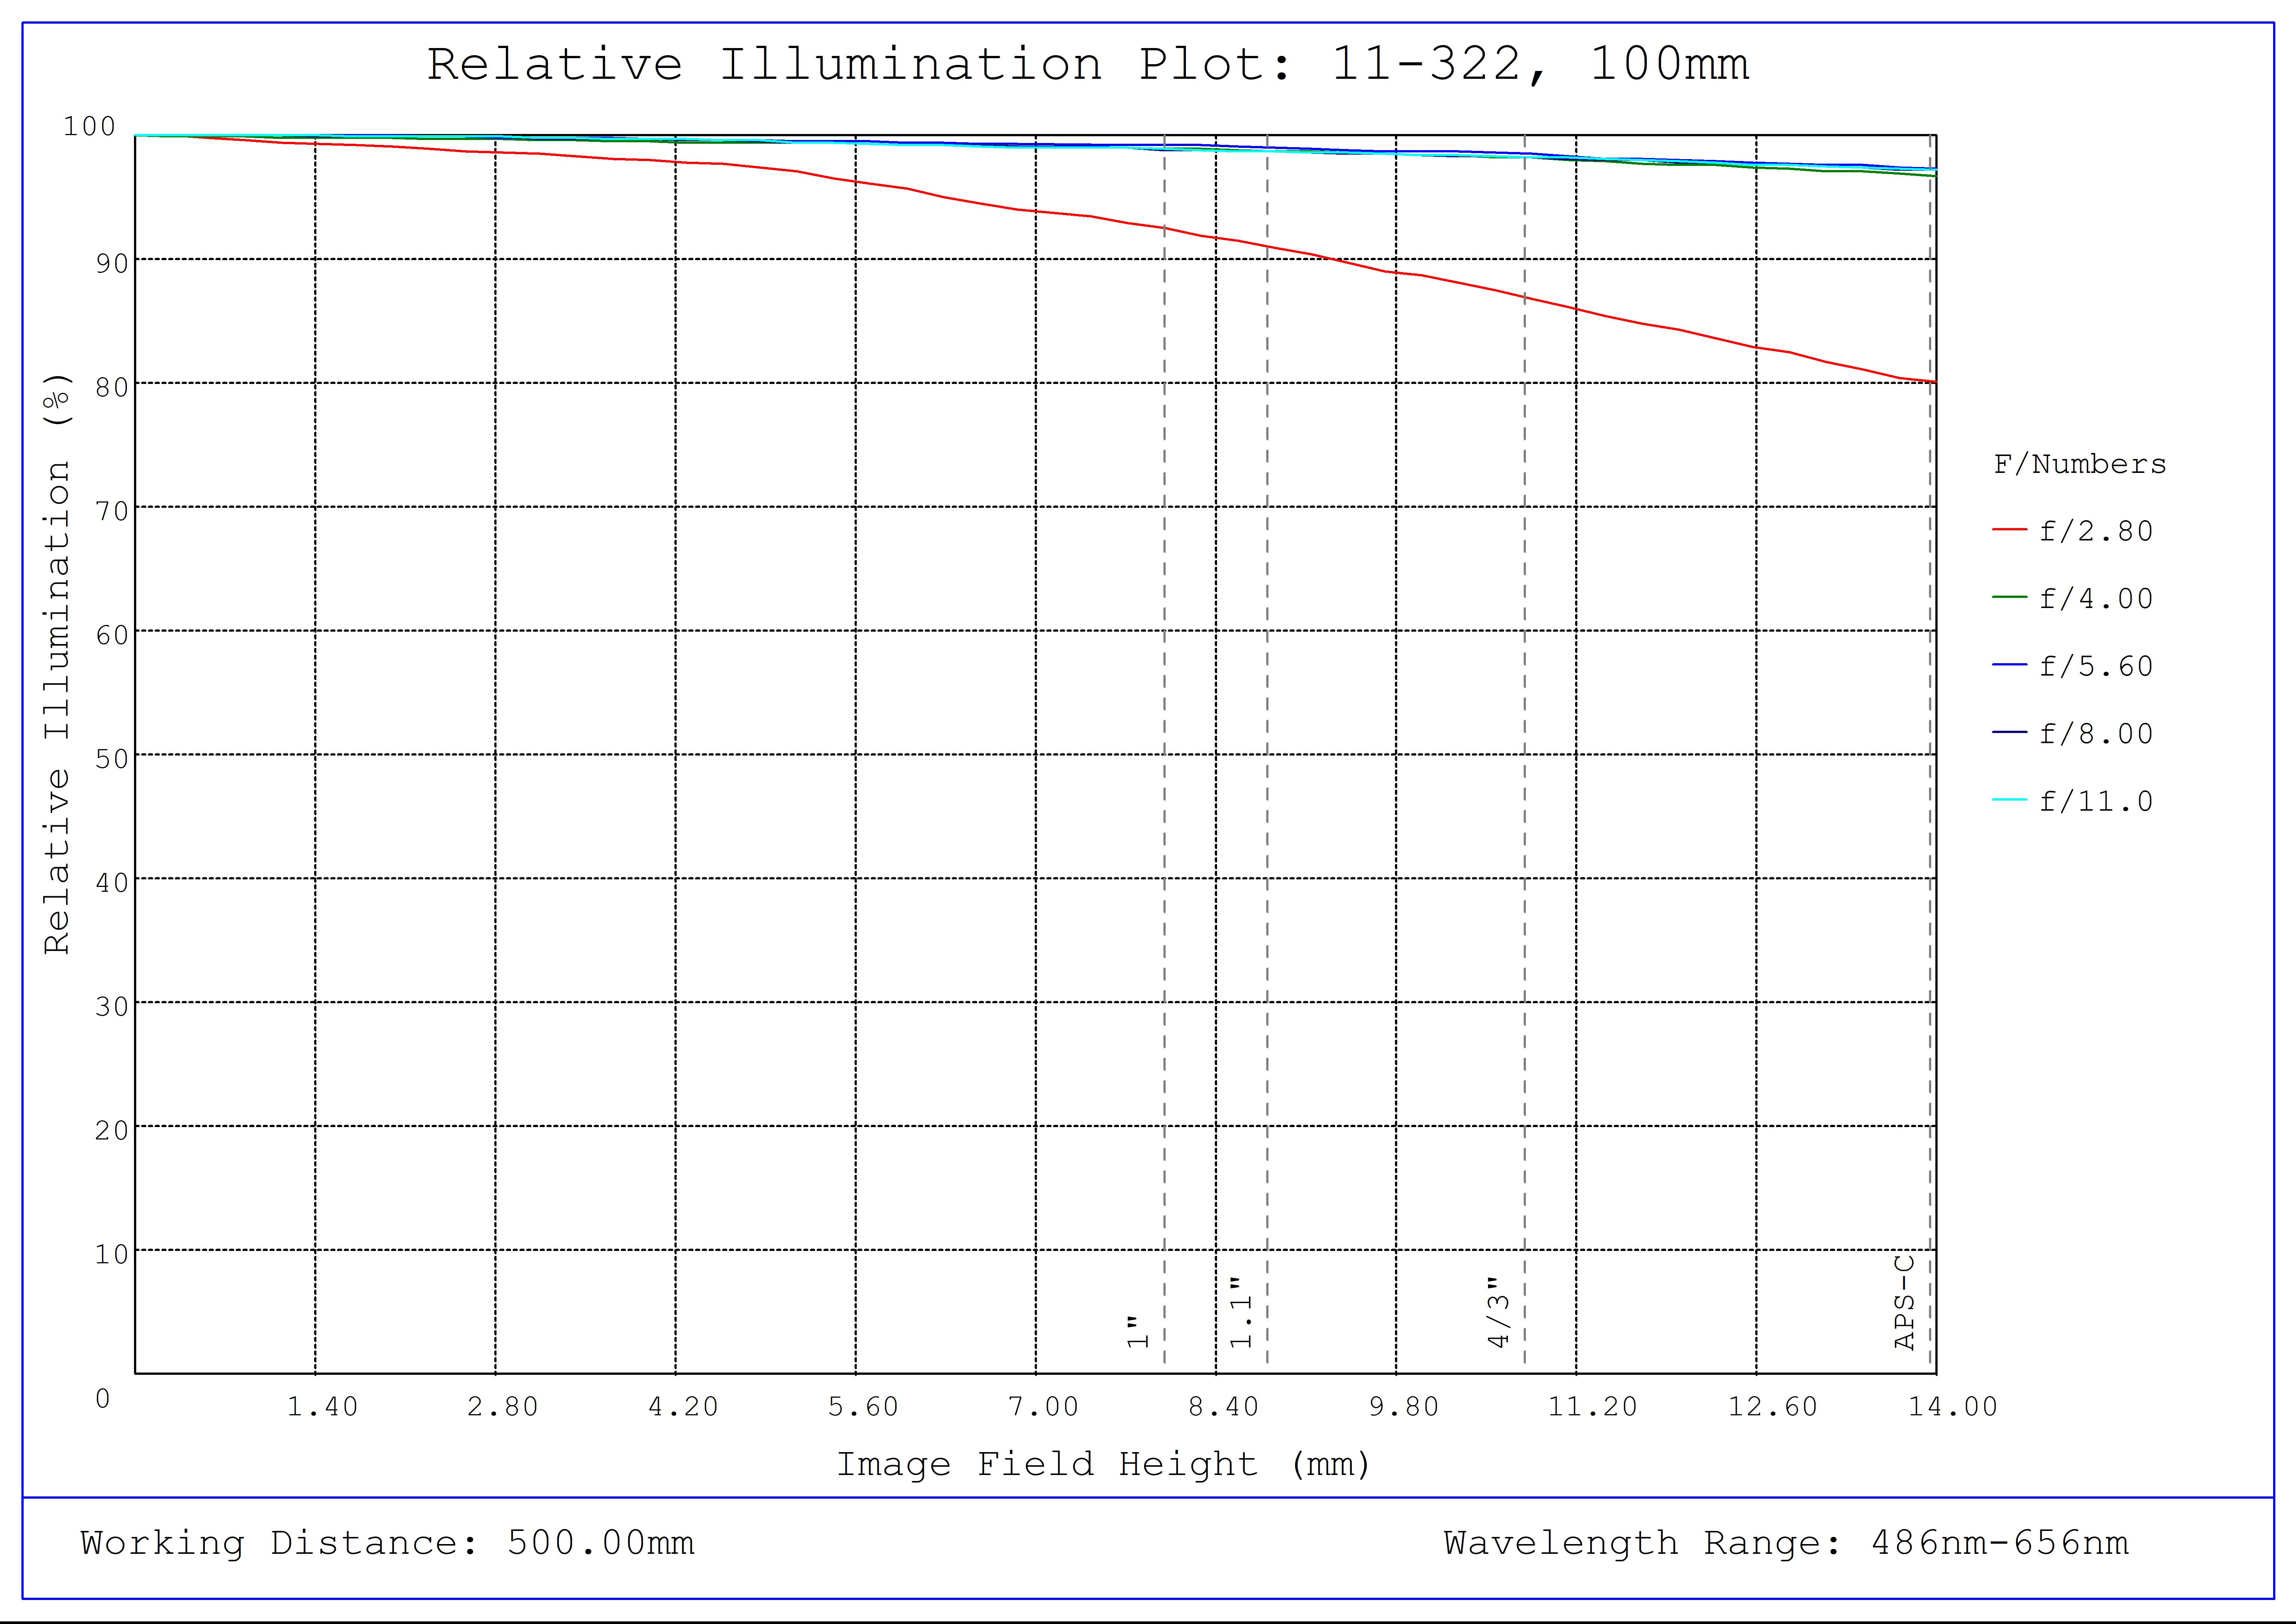 #11-322, 100mm CA Series Fixed Focal Length Lens, Relative Illumination Plot